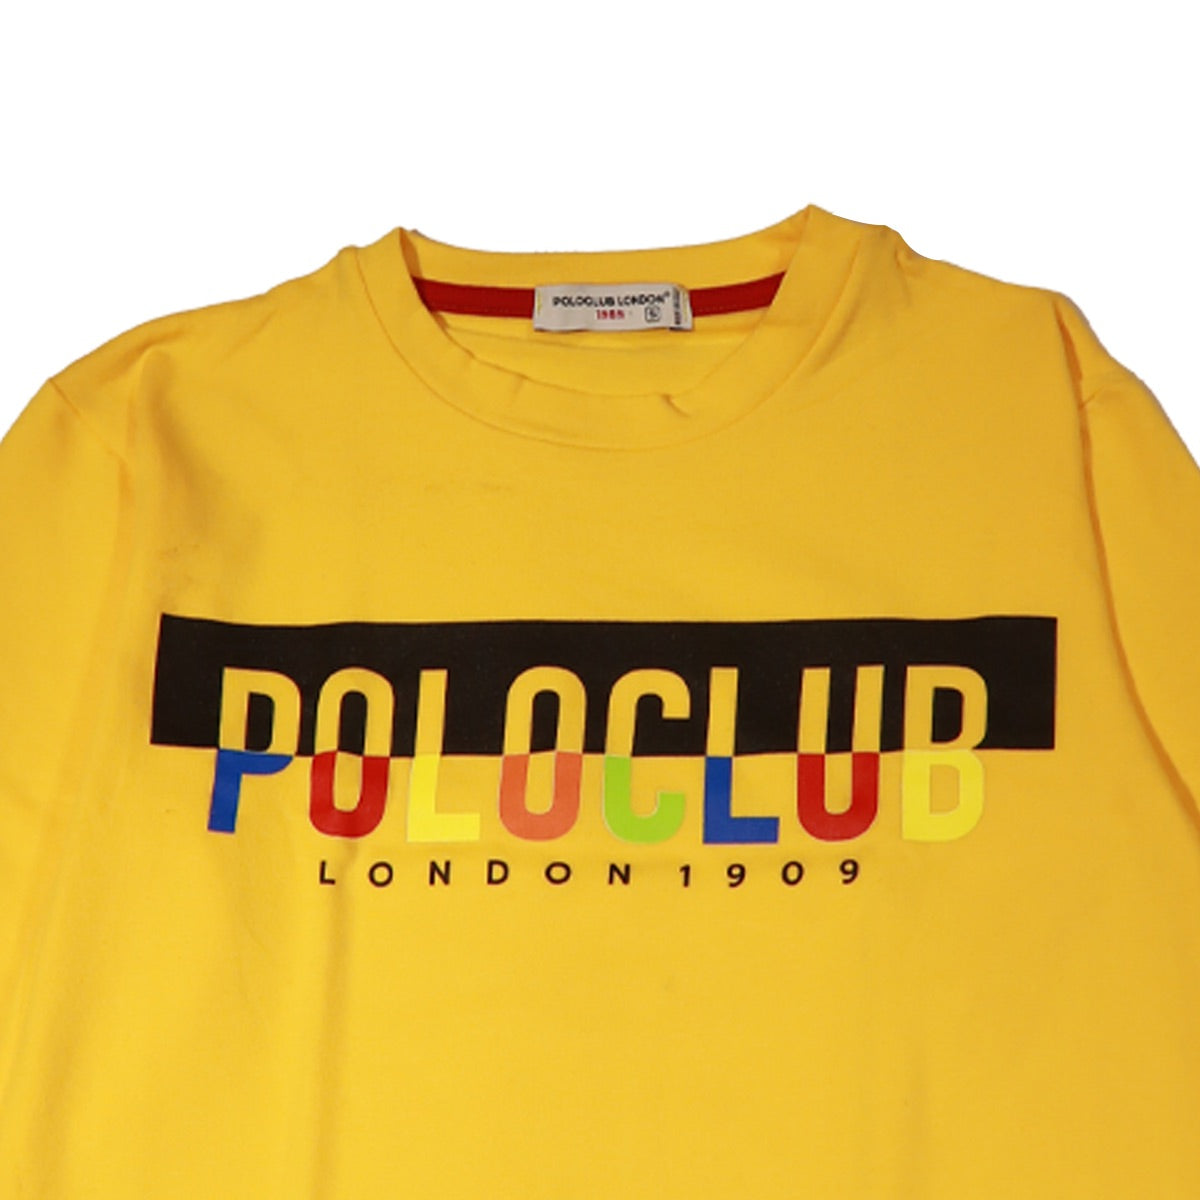 Polo Club London 1909 t-shirt baby boy